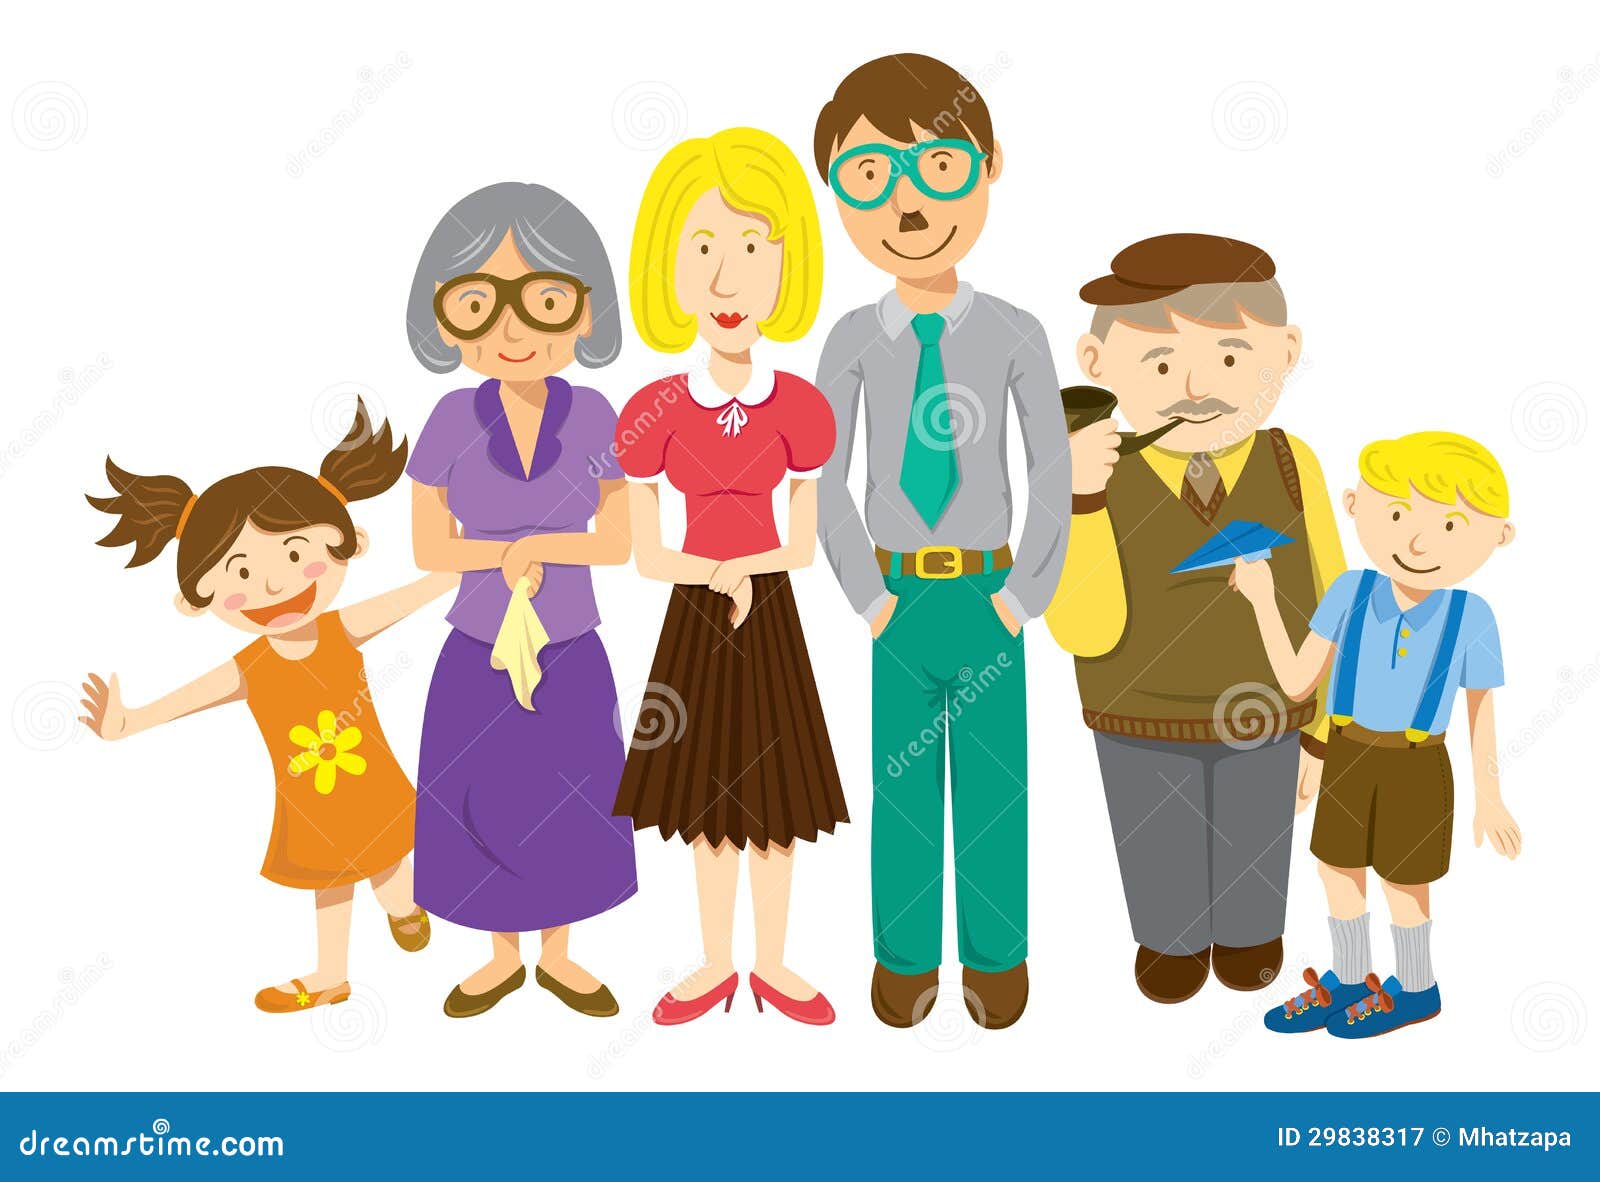 Family cartoon stock illustration. Illustration of isolated - 29838317